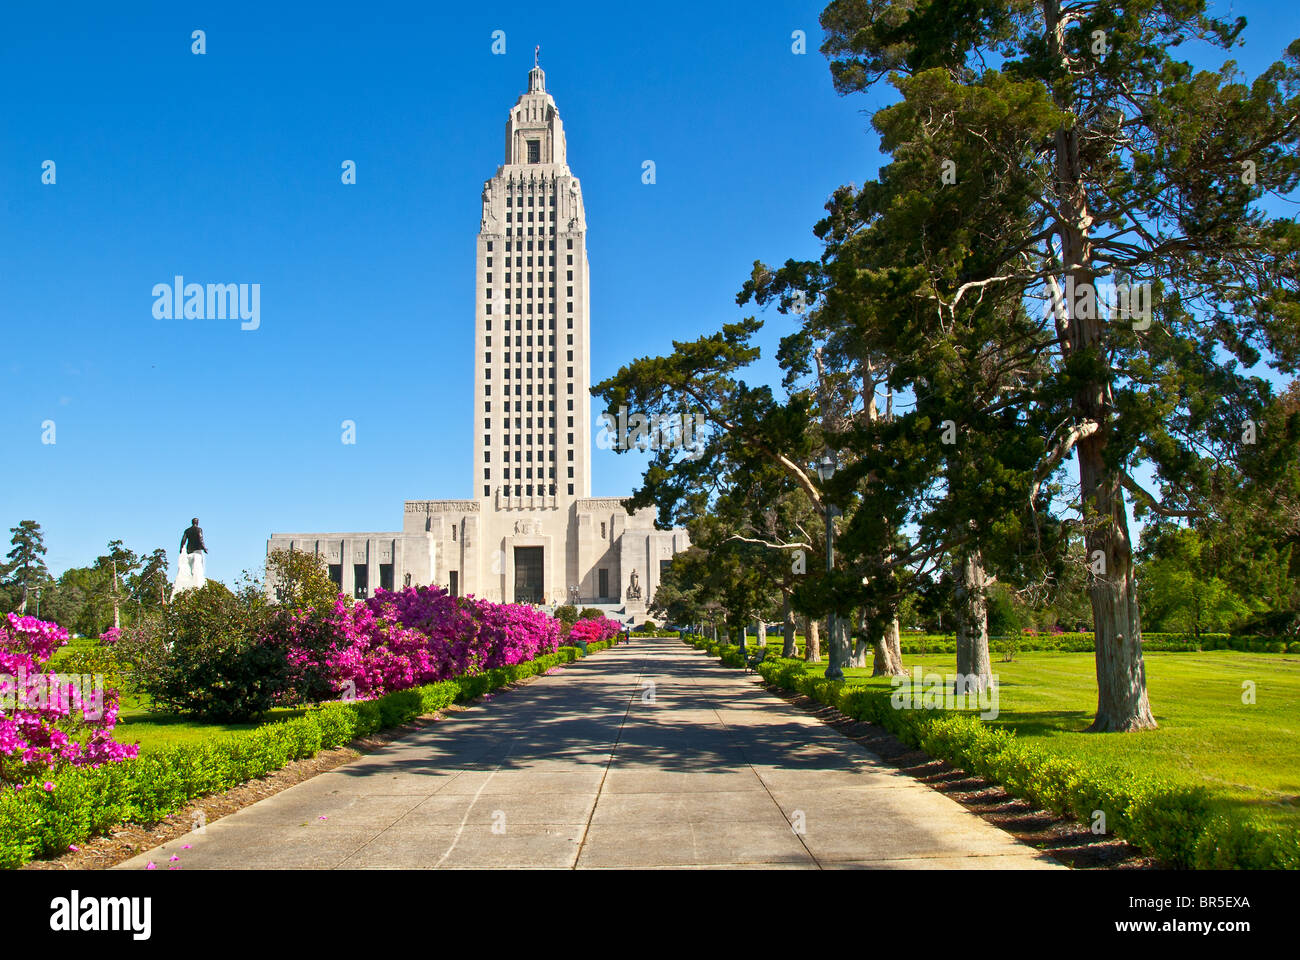 The Louisiana State Capitol in Baton Rouge, Louisiana, USA Stock Photo